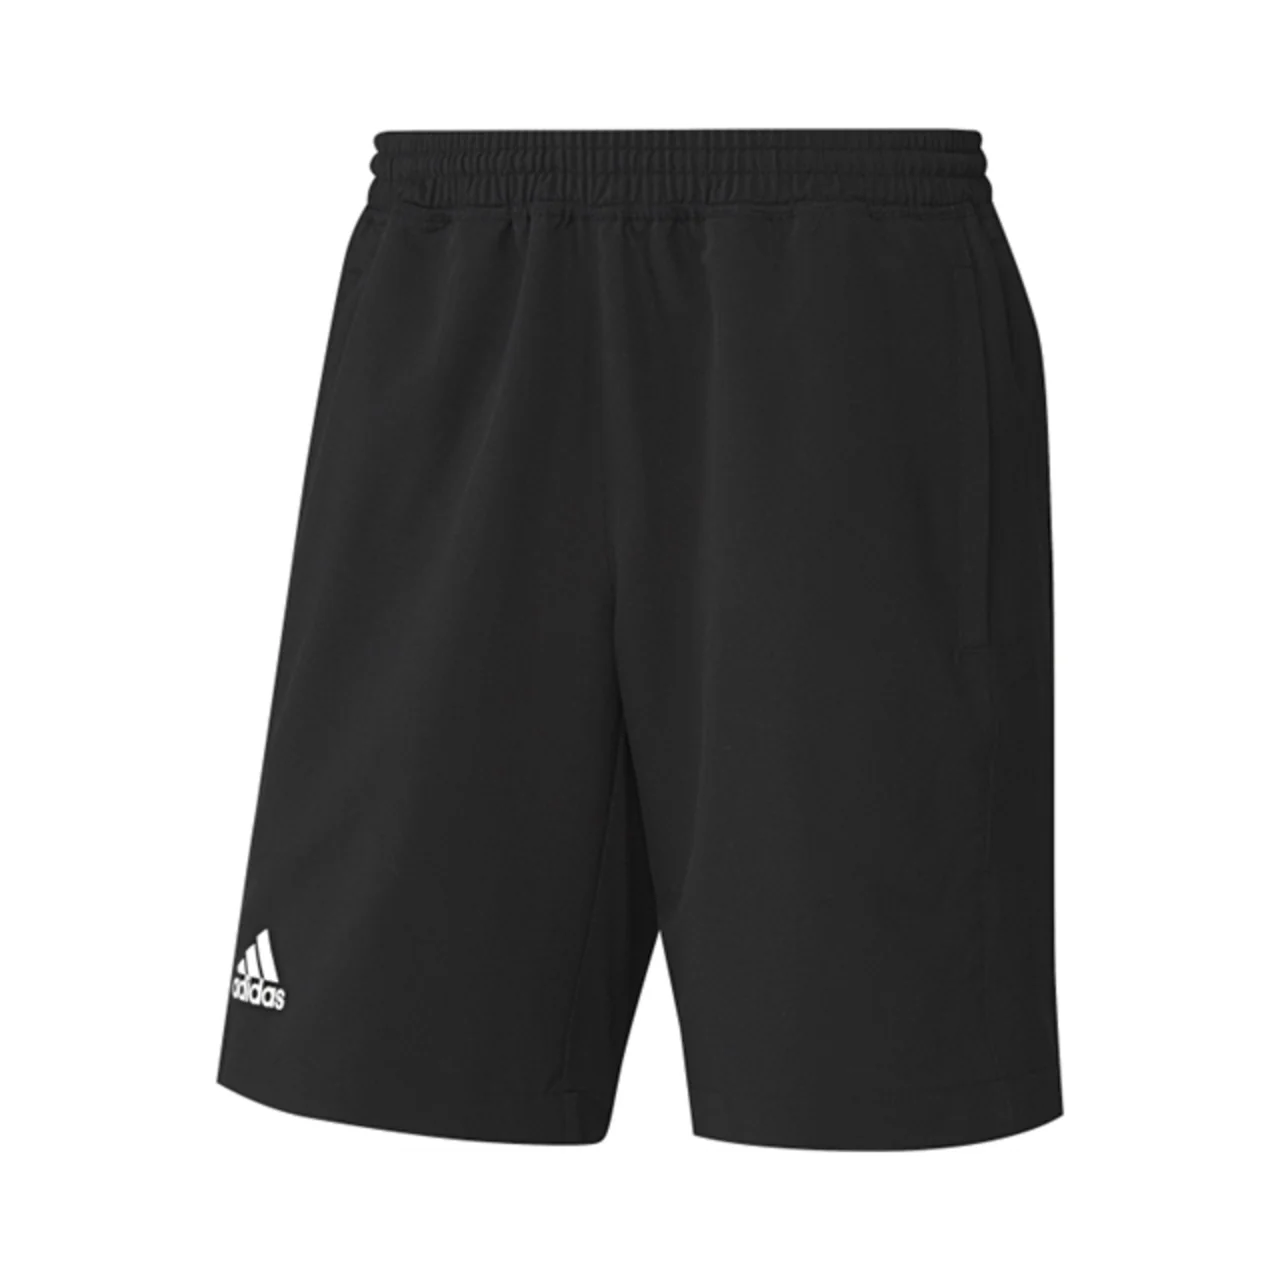 Adidas T16 CC Shorts Men Black